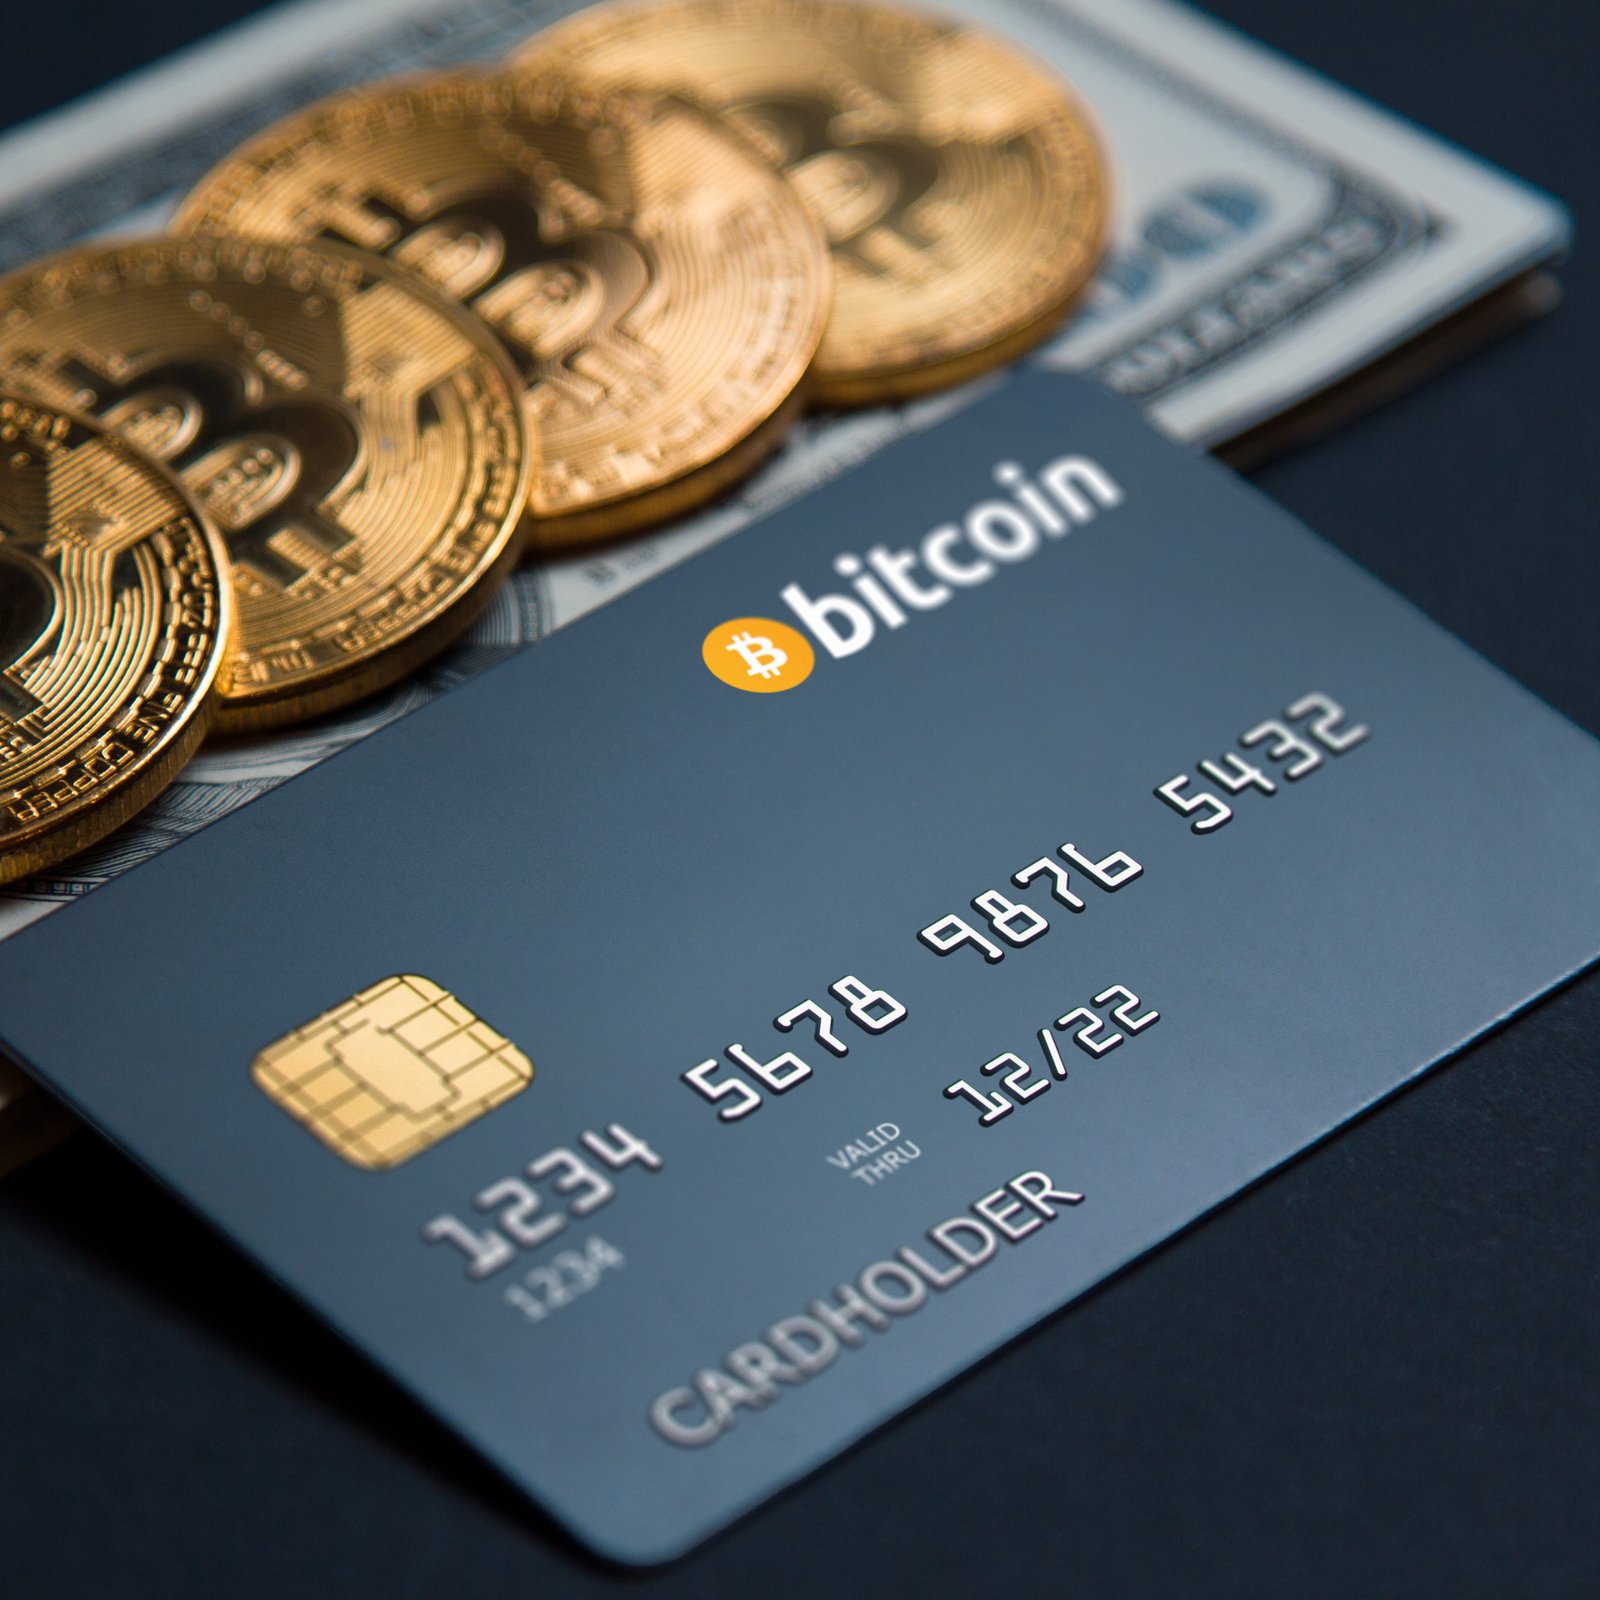 Buy bitcoins uk credit card score my bitcoin